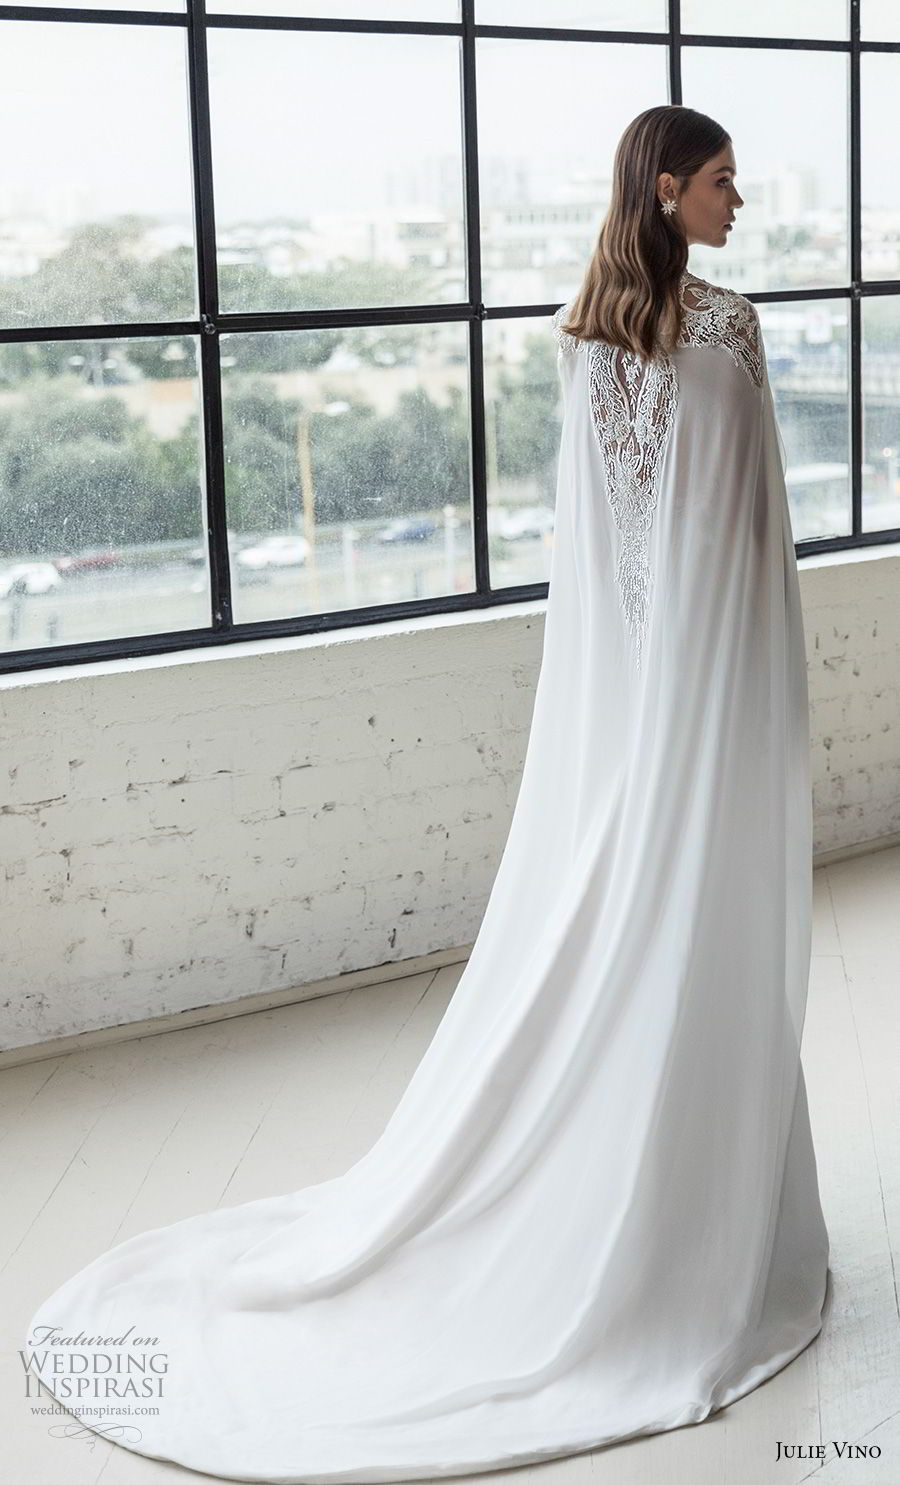 julie vino 2019 wedding dresses